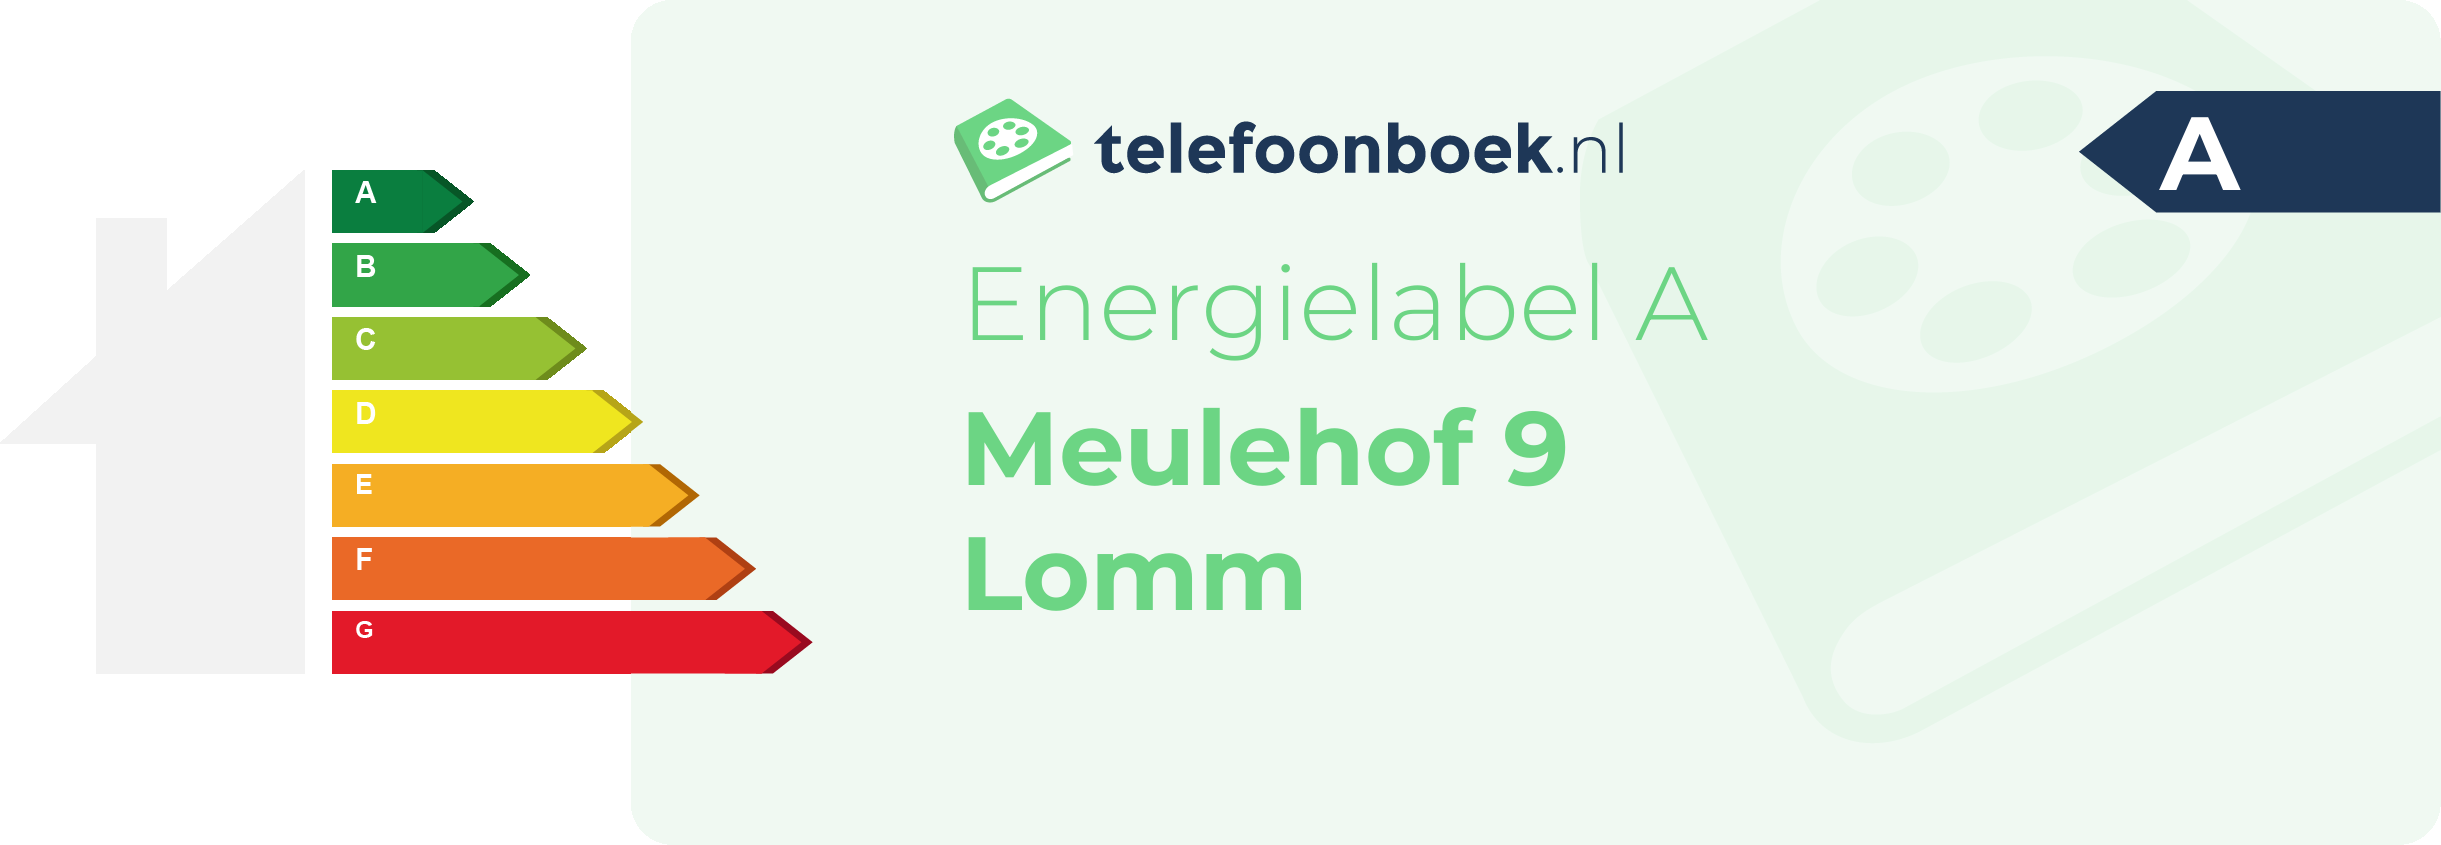 Energielabel Meulehof 9 Lomm